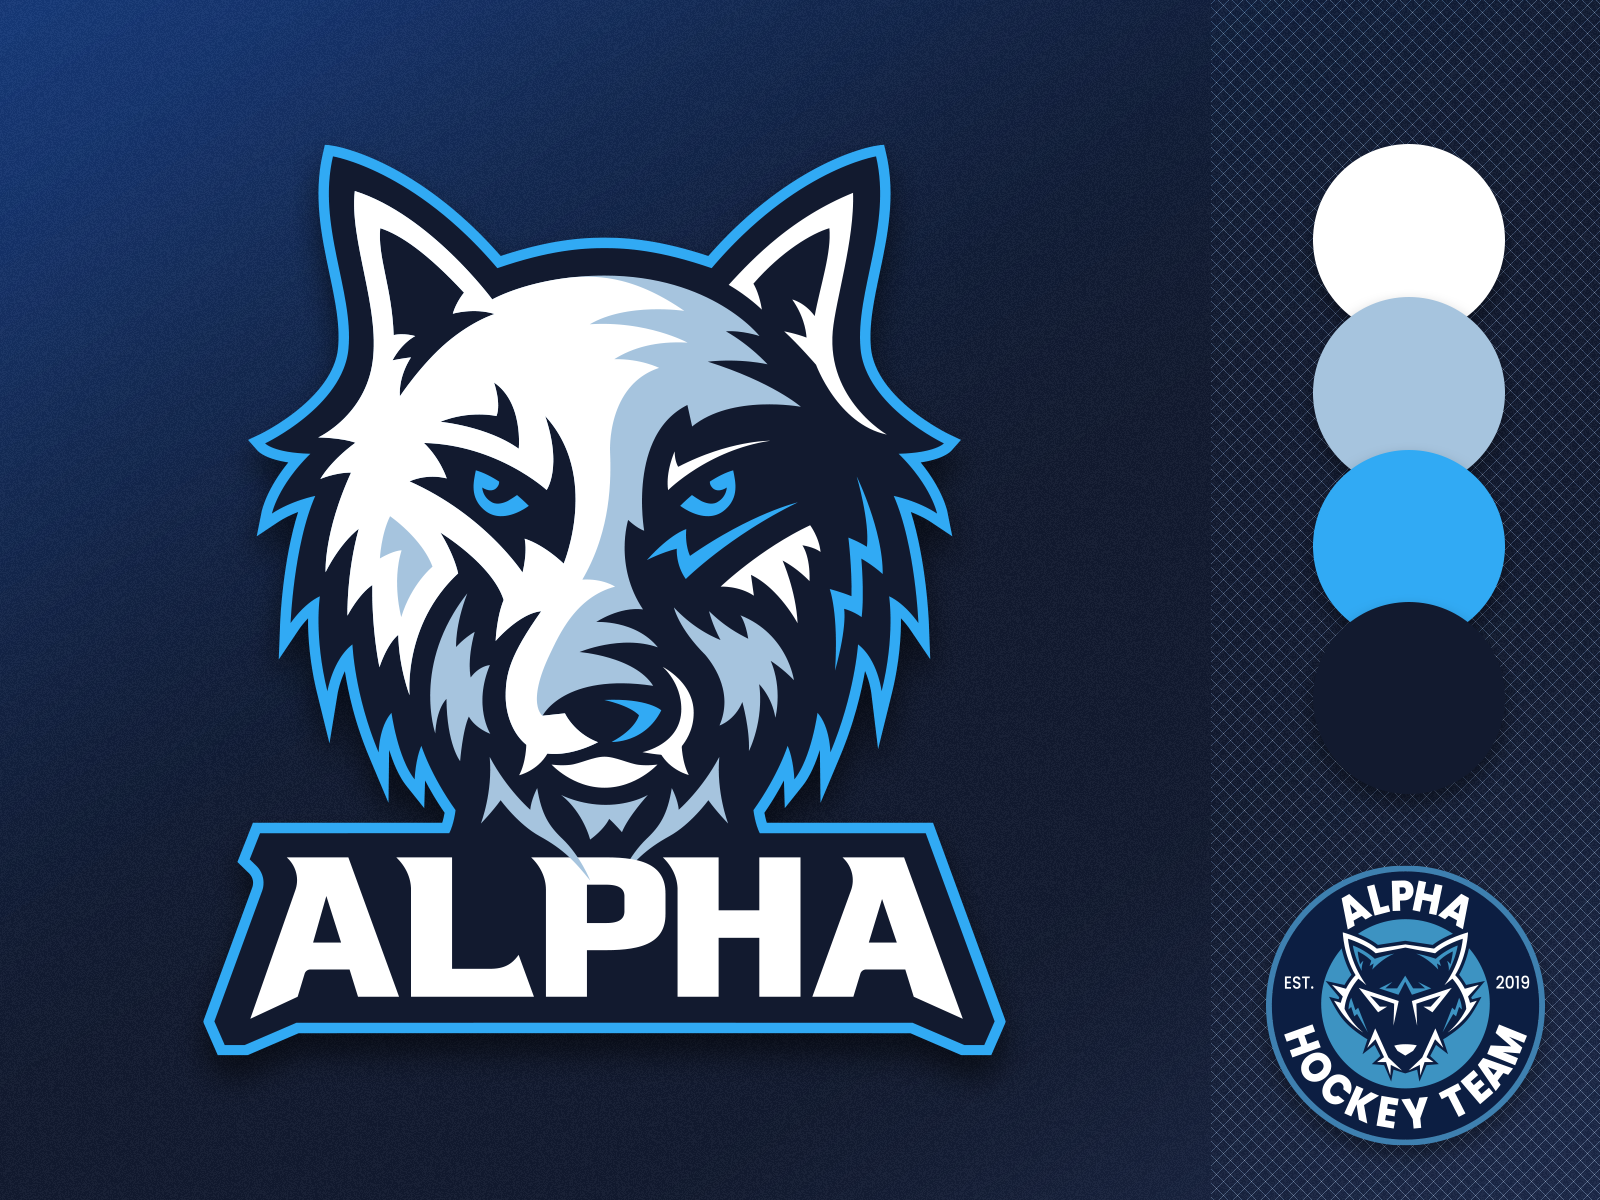 Introducing the new AlphaTheta brand logo